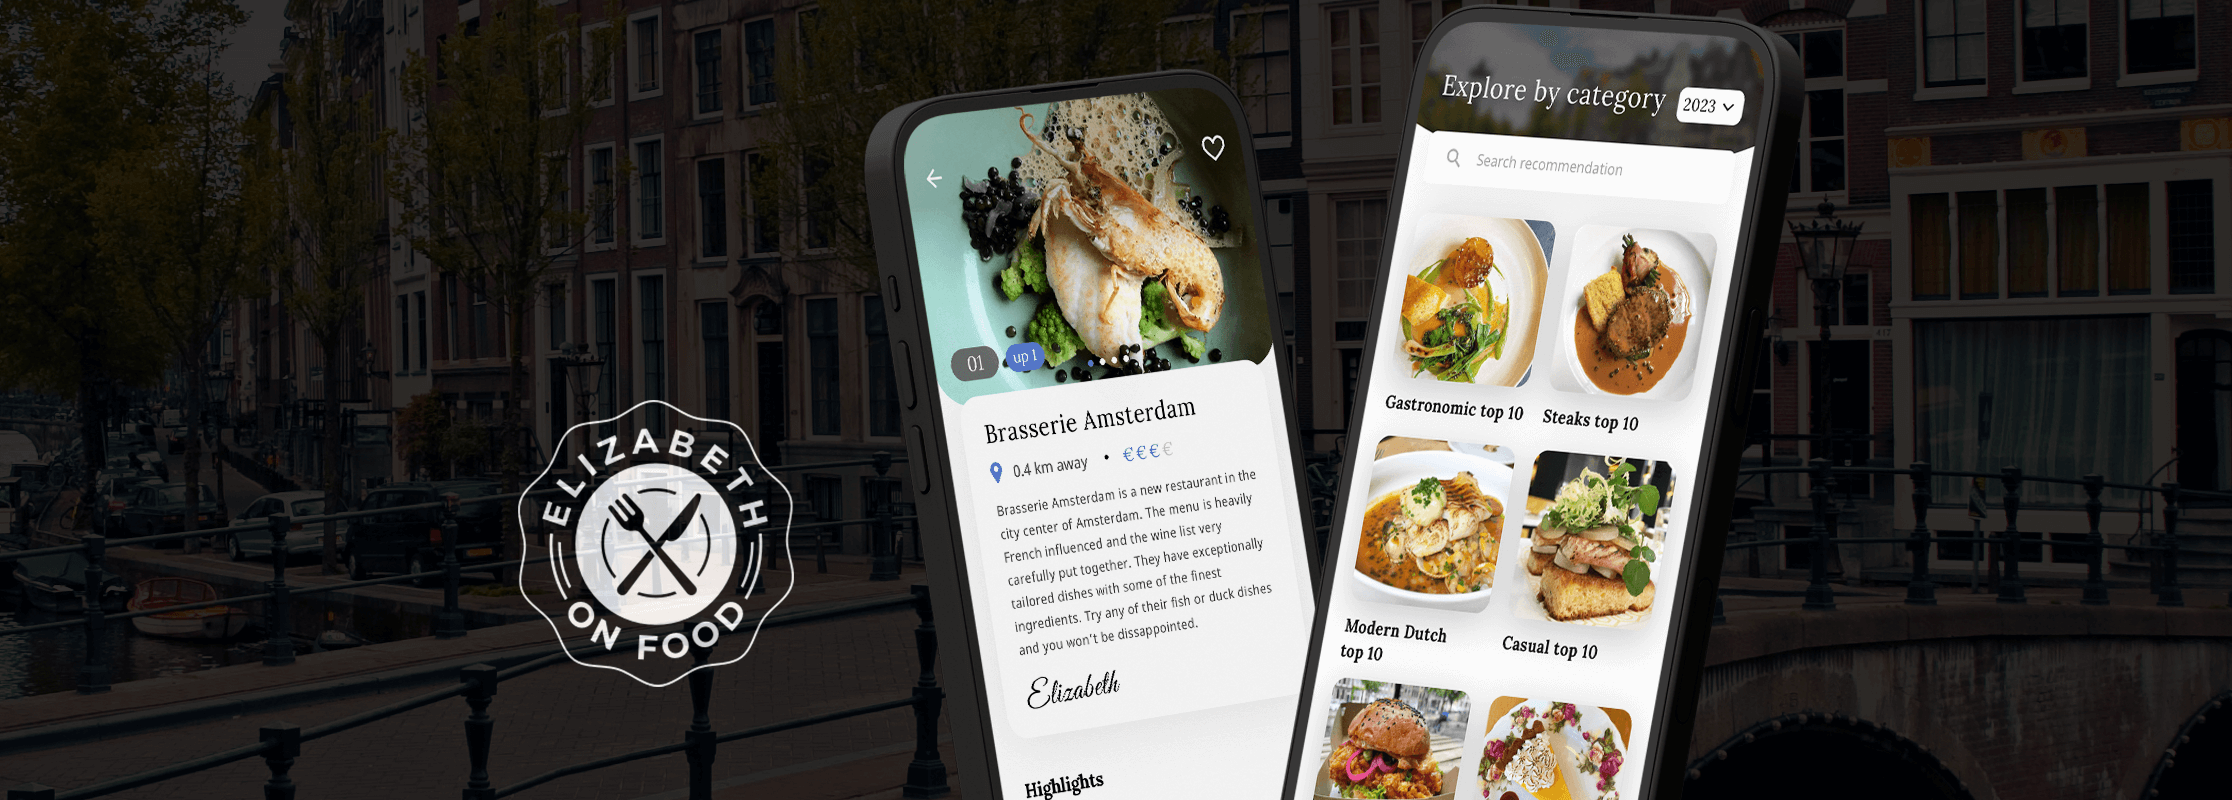 Elizabeth on Food: the restaurant guide app of Amsterdam